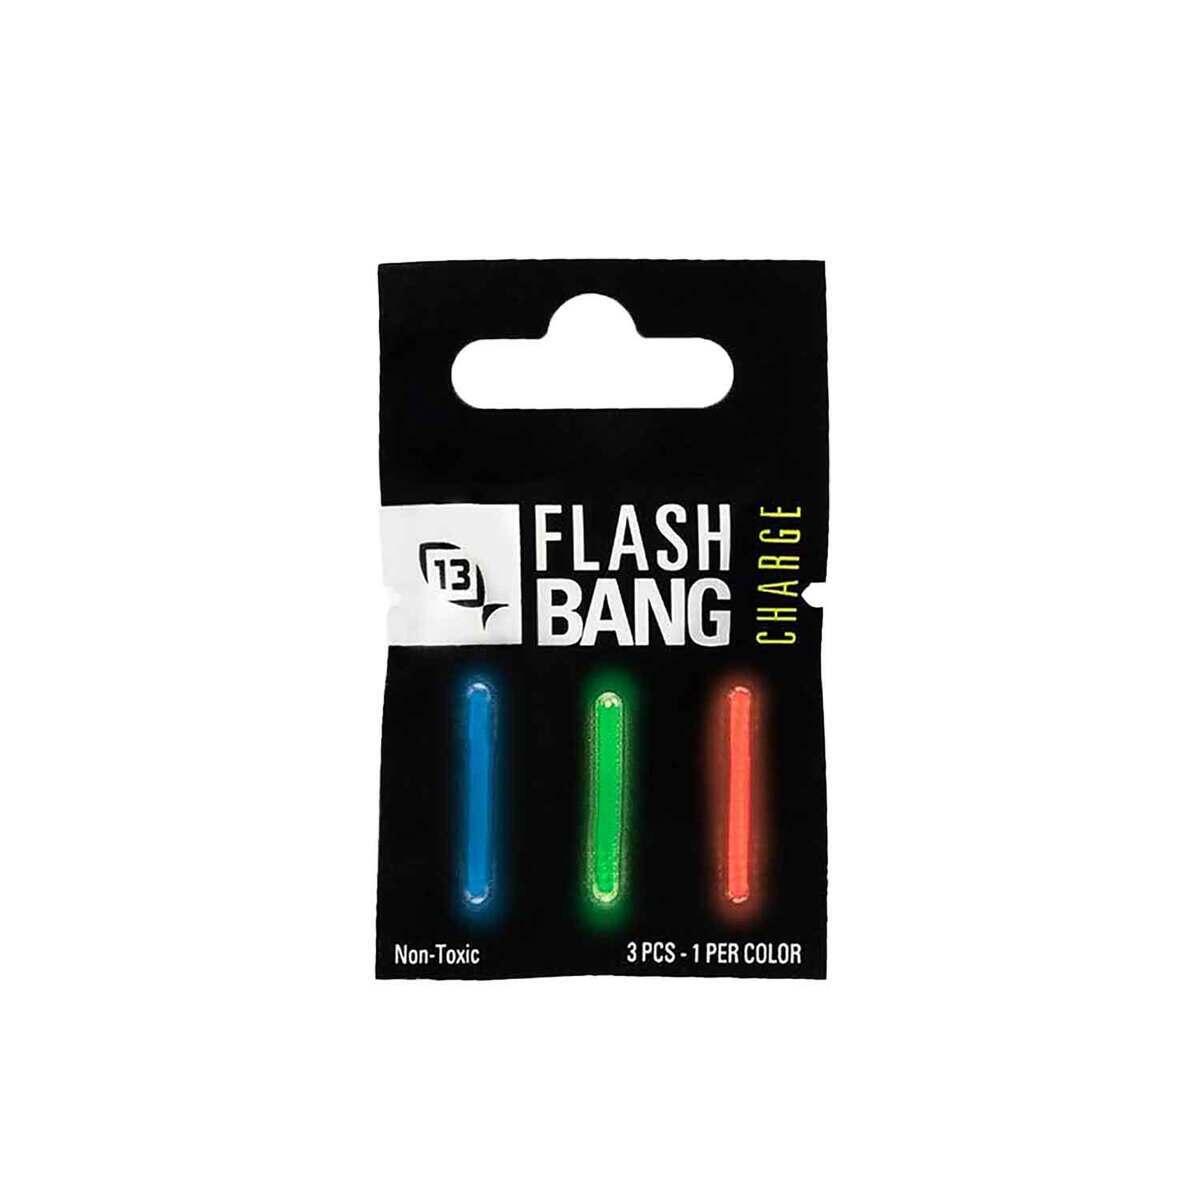 13 Fishing Flash Bang Glowstick Refill Kit - 3 Pack